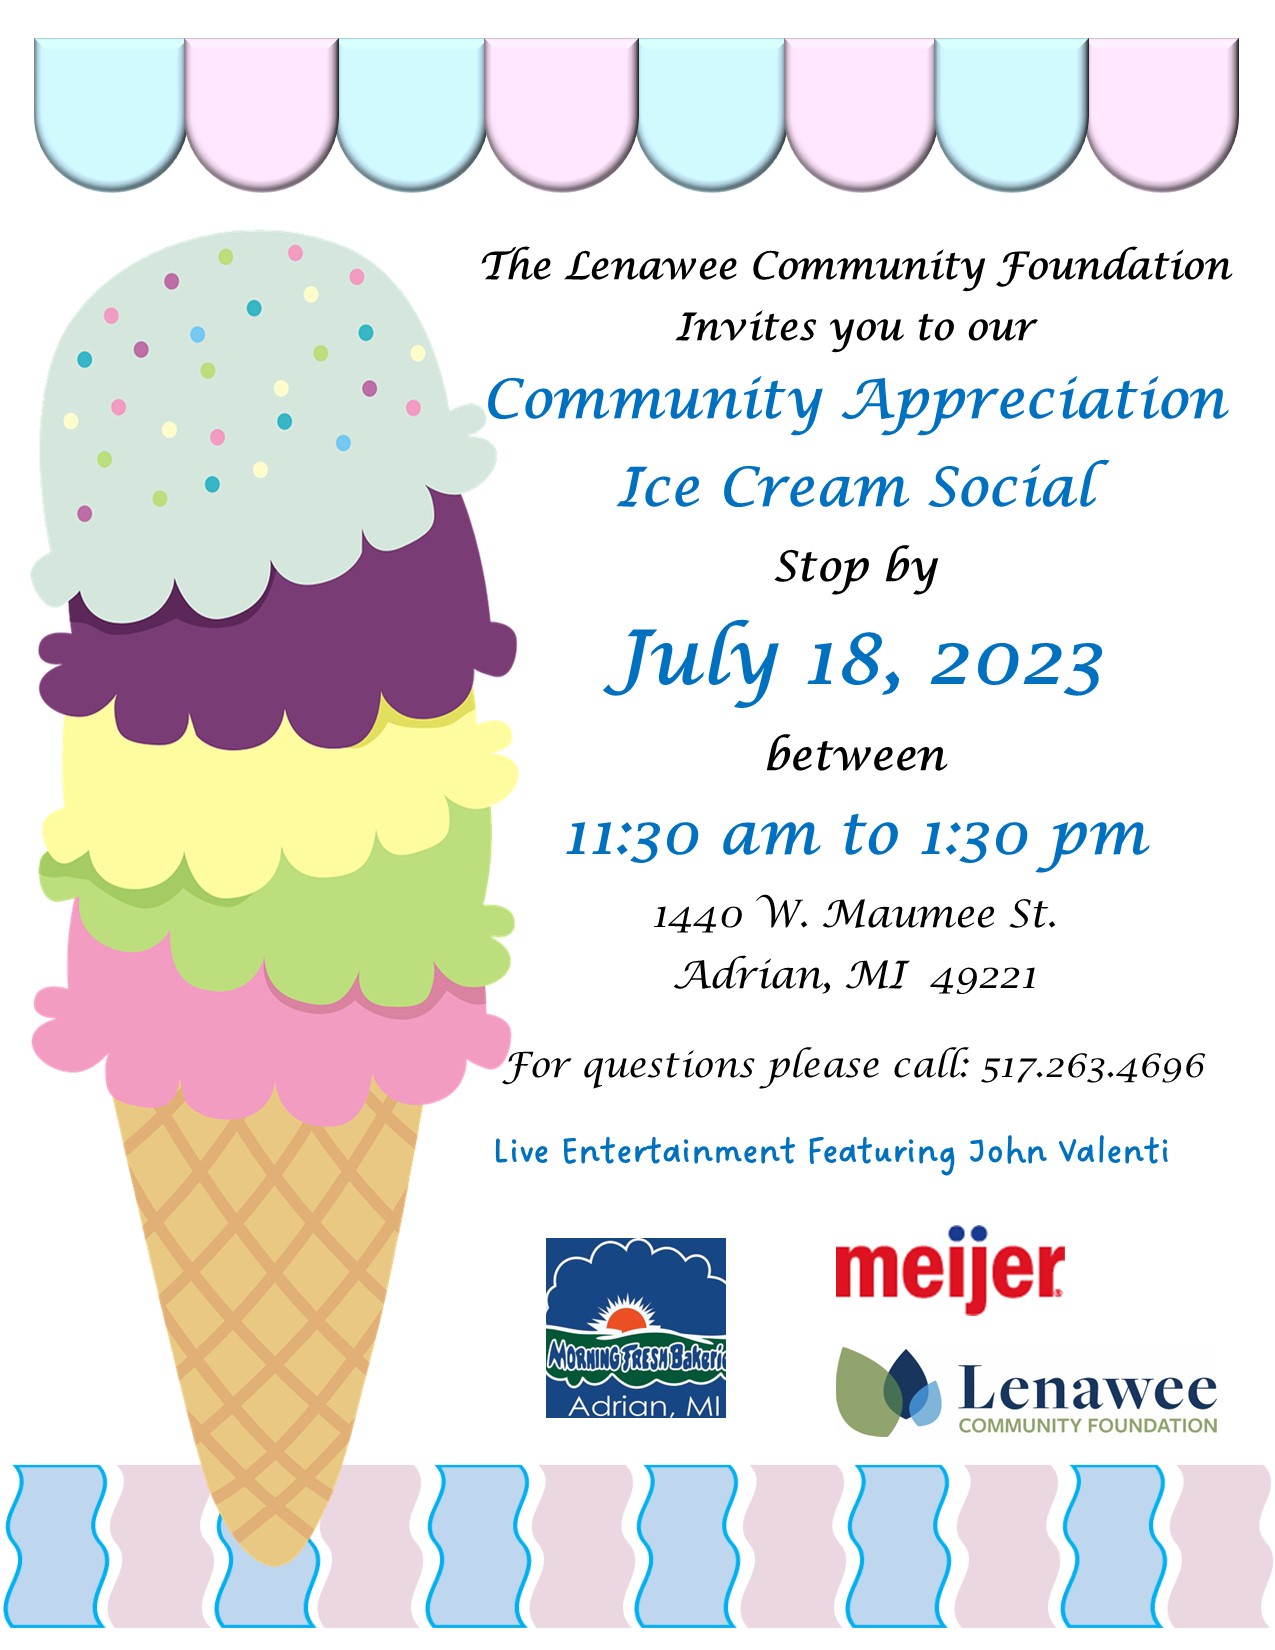 The Lenawee Community Foundation Announces Community Appreciation Ice Cream Social